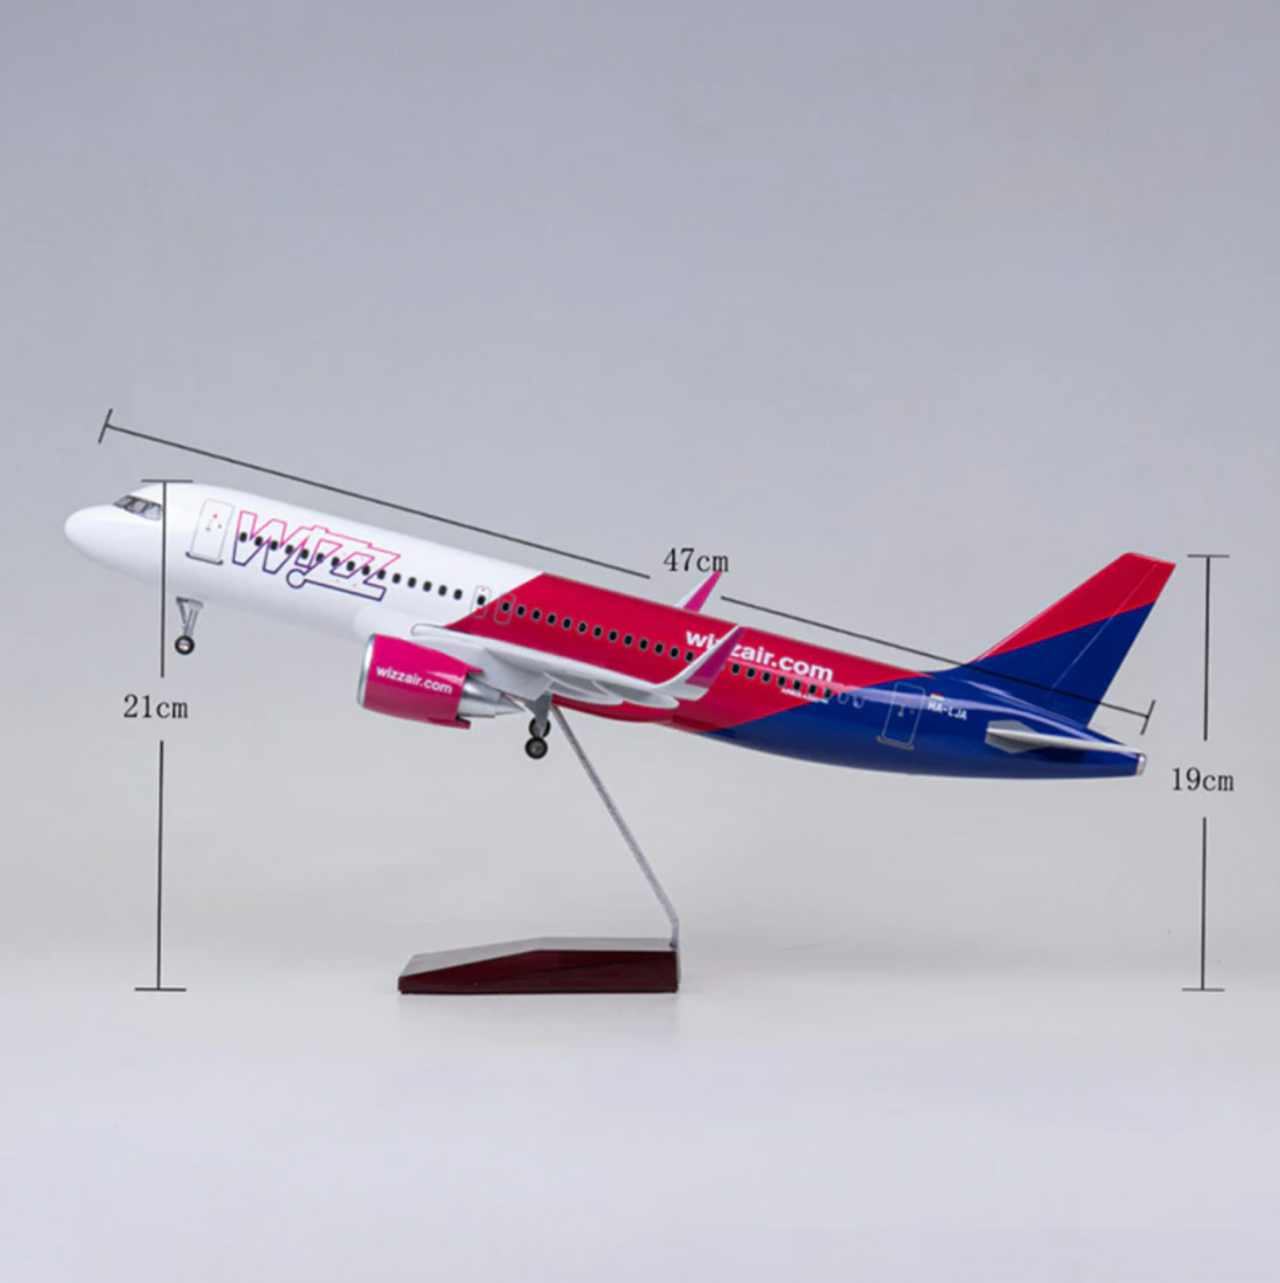 Wizz Air Airbus A320Neo Airplane Model (47CM)